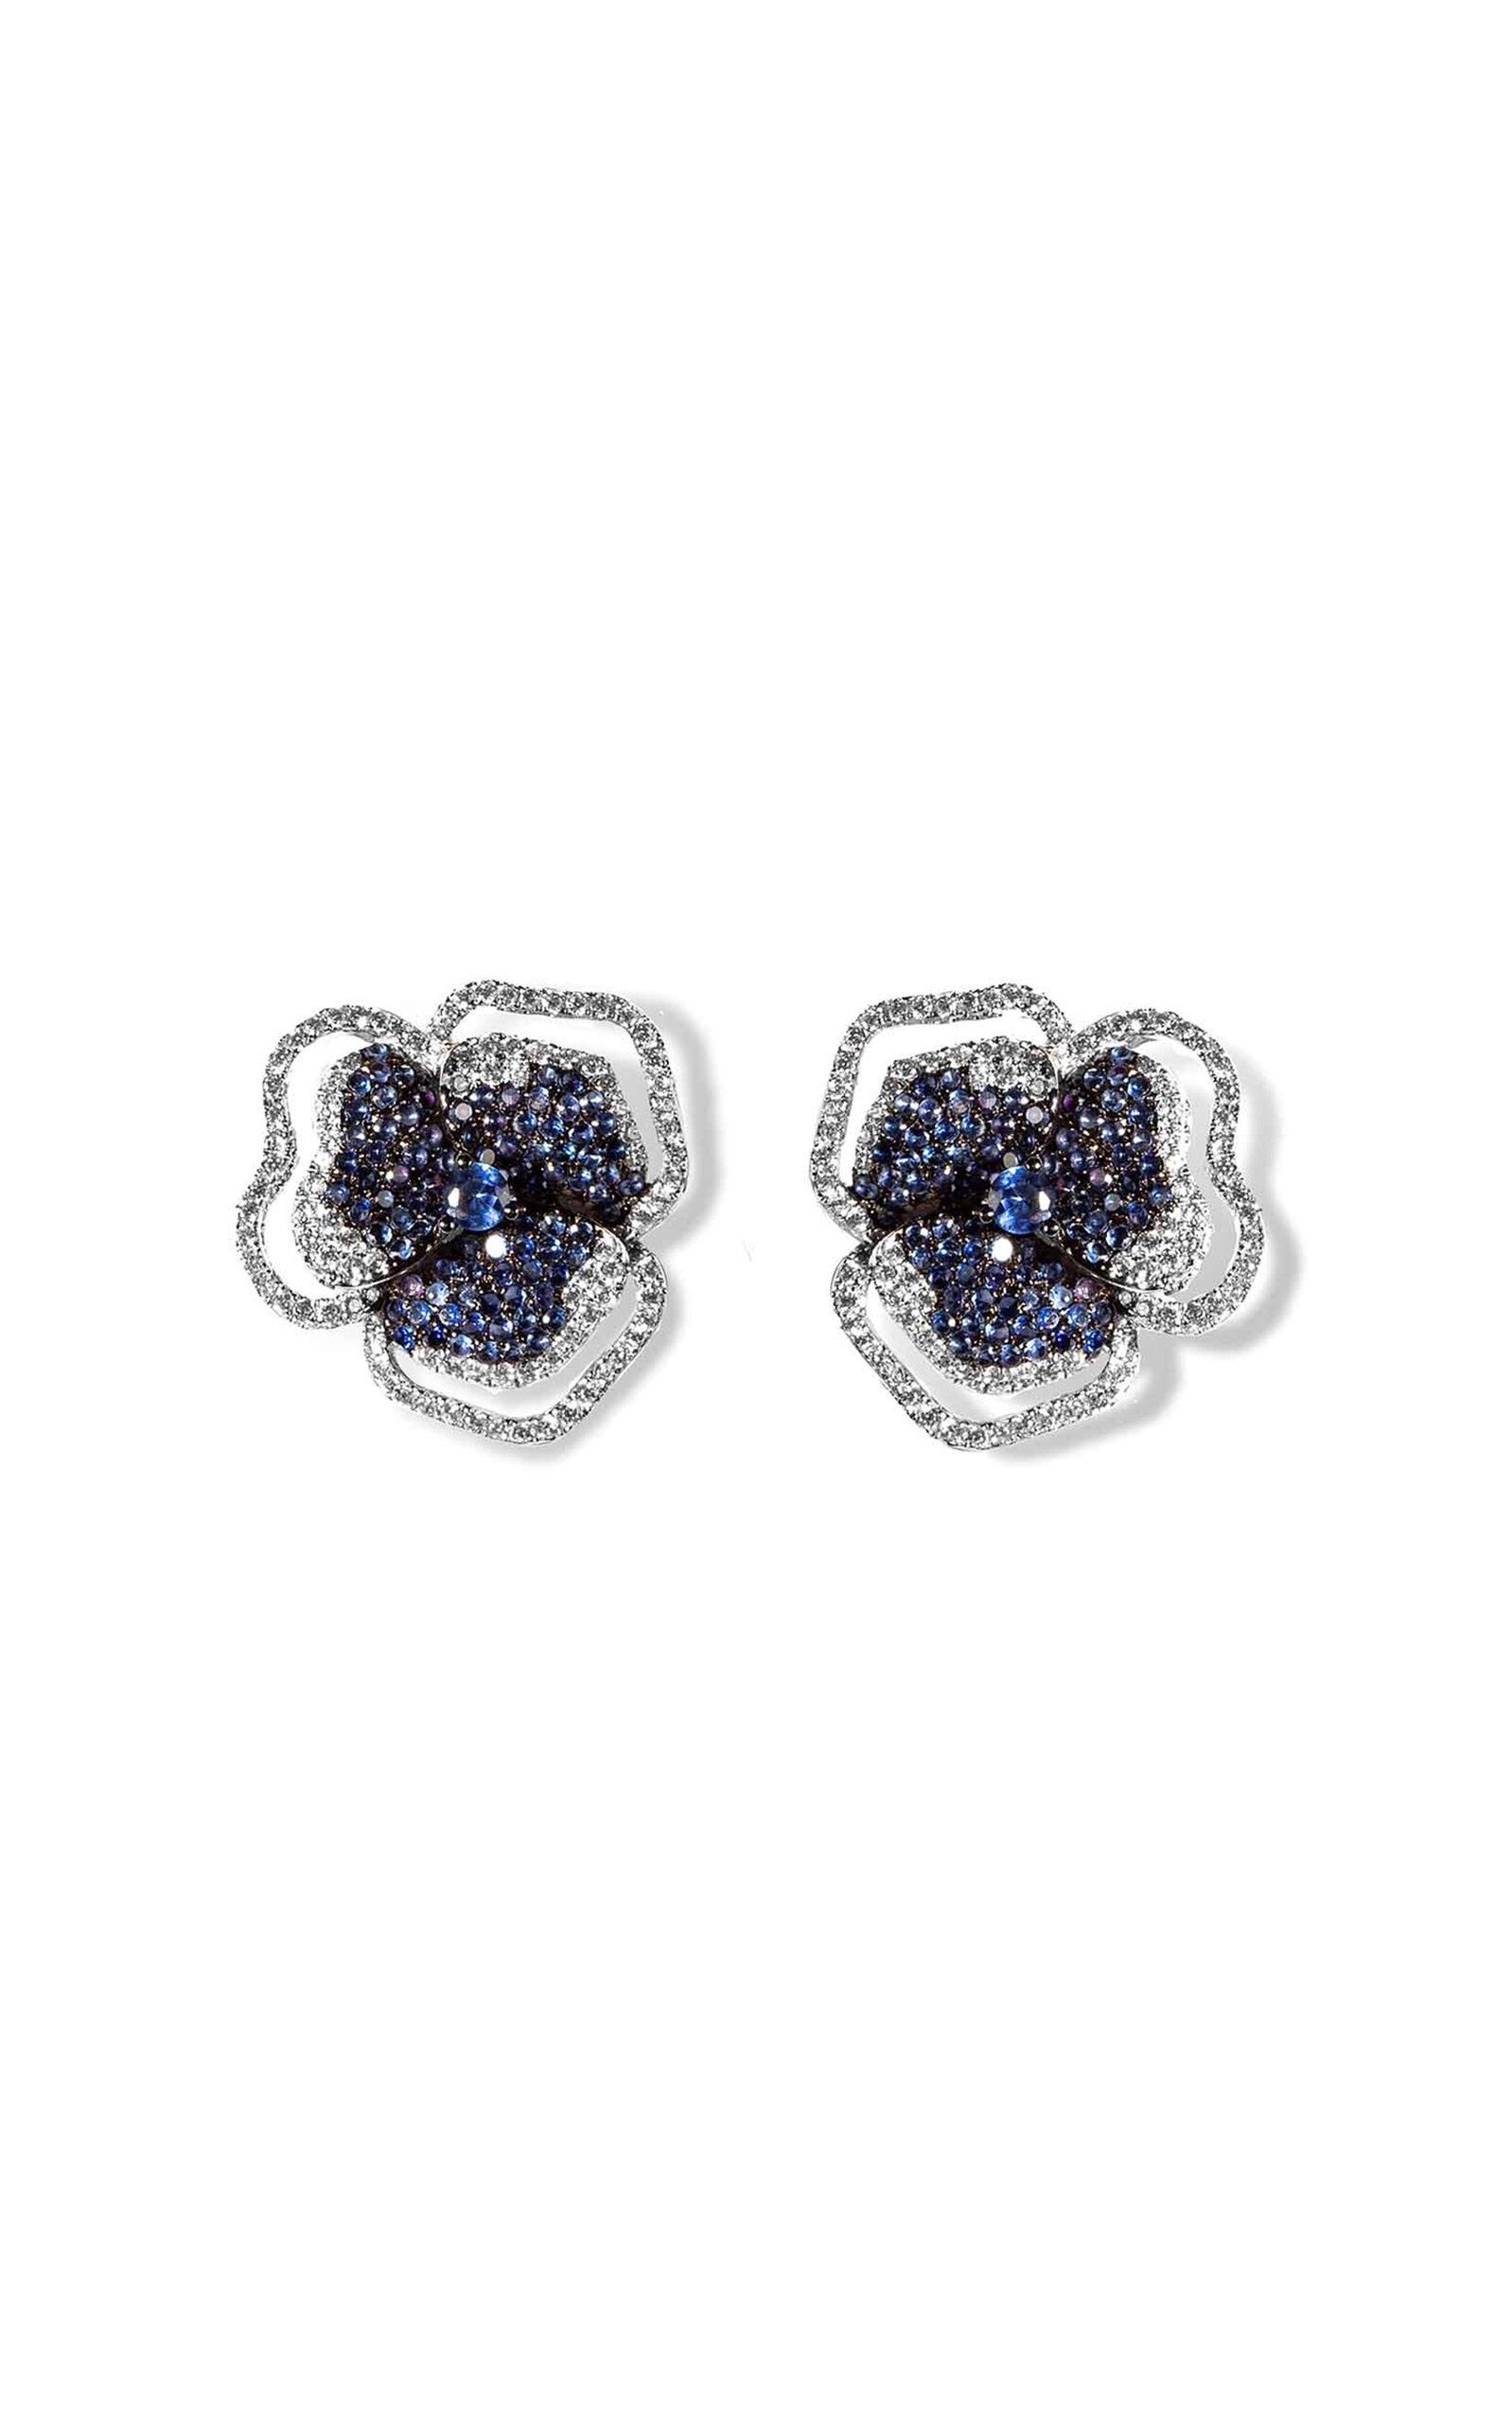 As29 One Of A Kind Bloom 18k White Gold Diamond Earrings In Blue